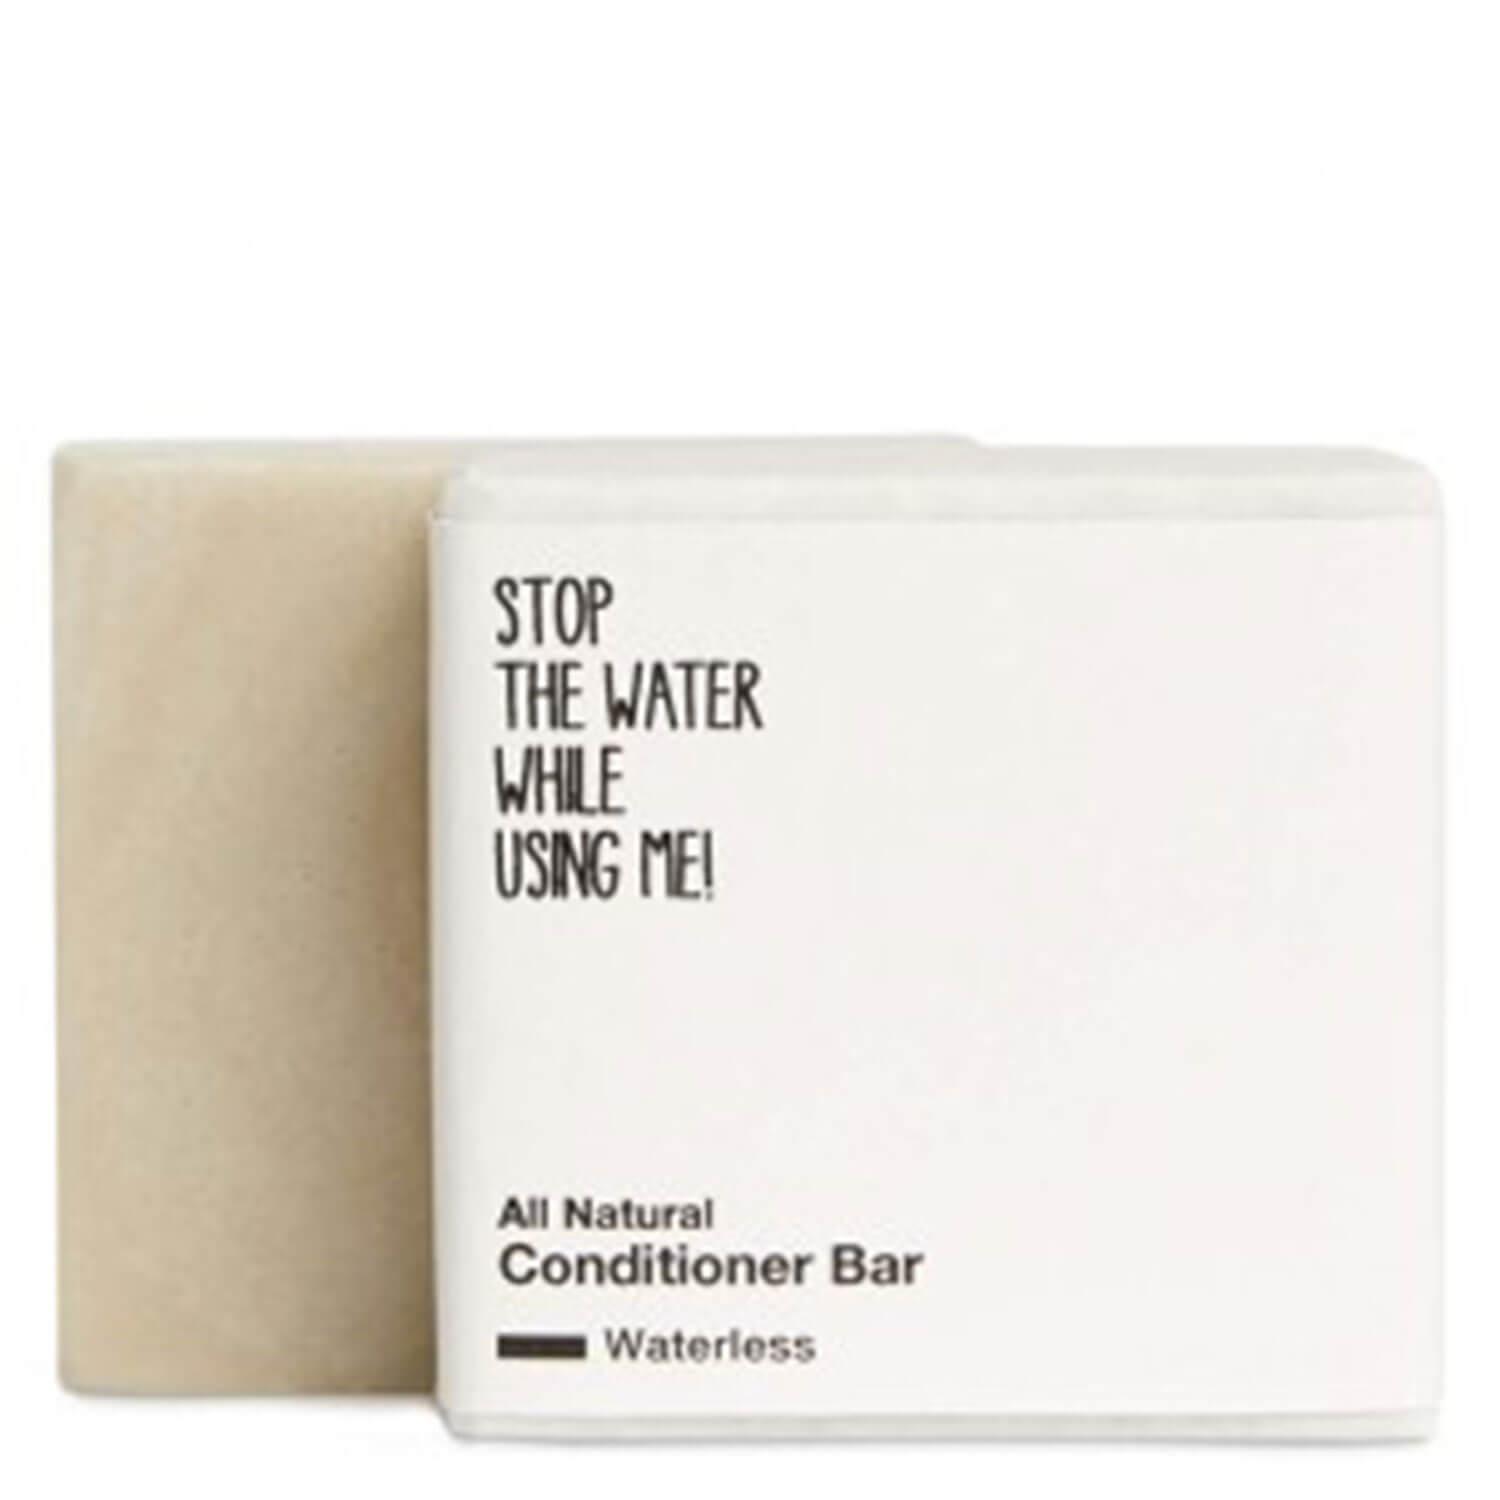 All Natural Hair - Waterless Conditioner Bar